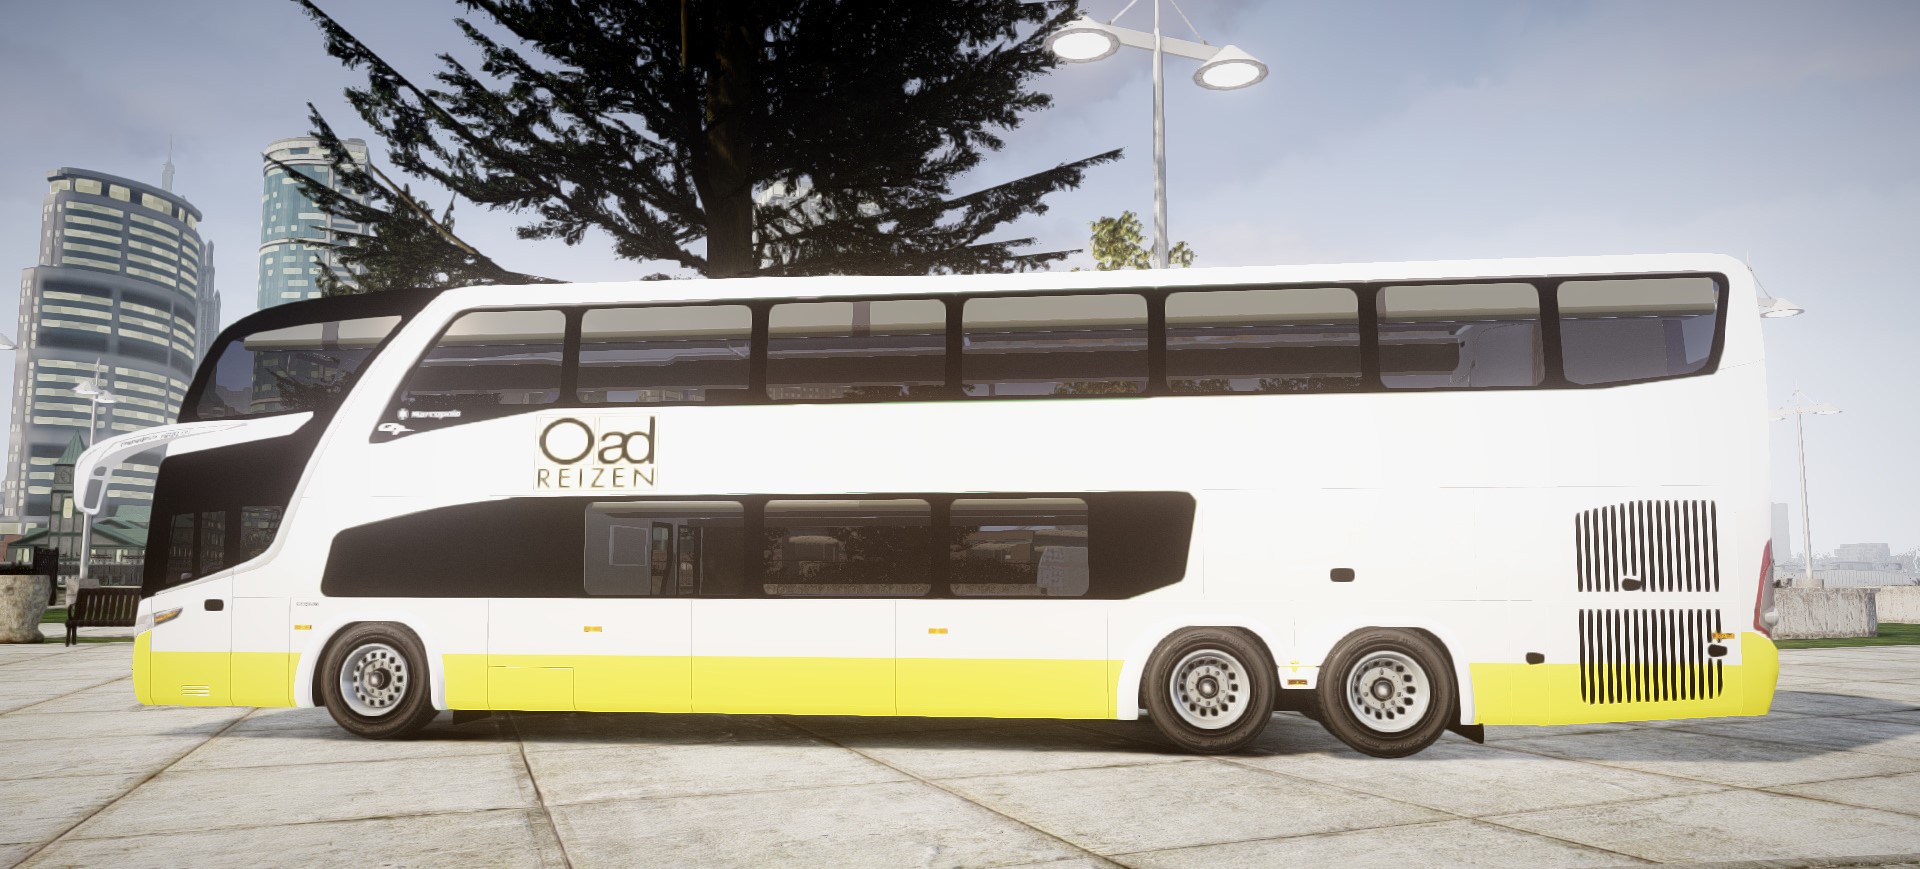 Oad Bus